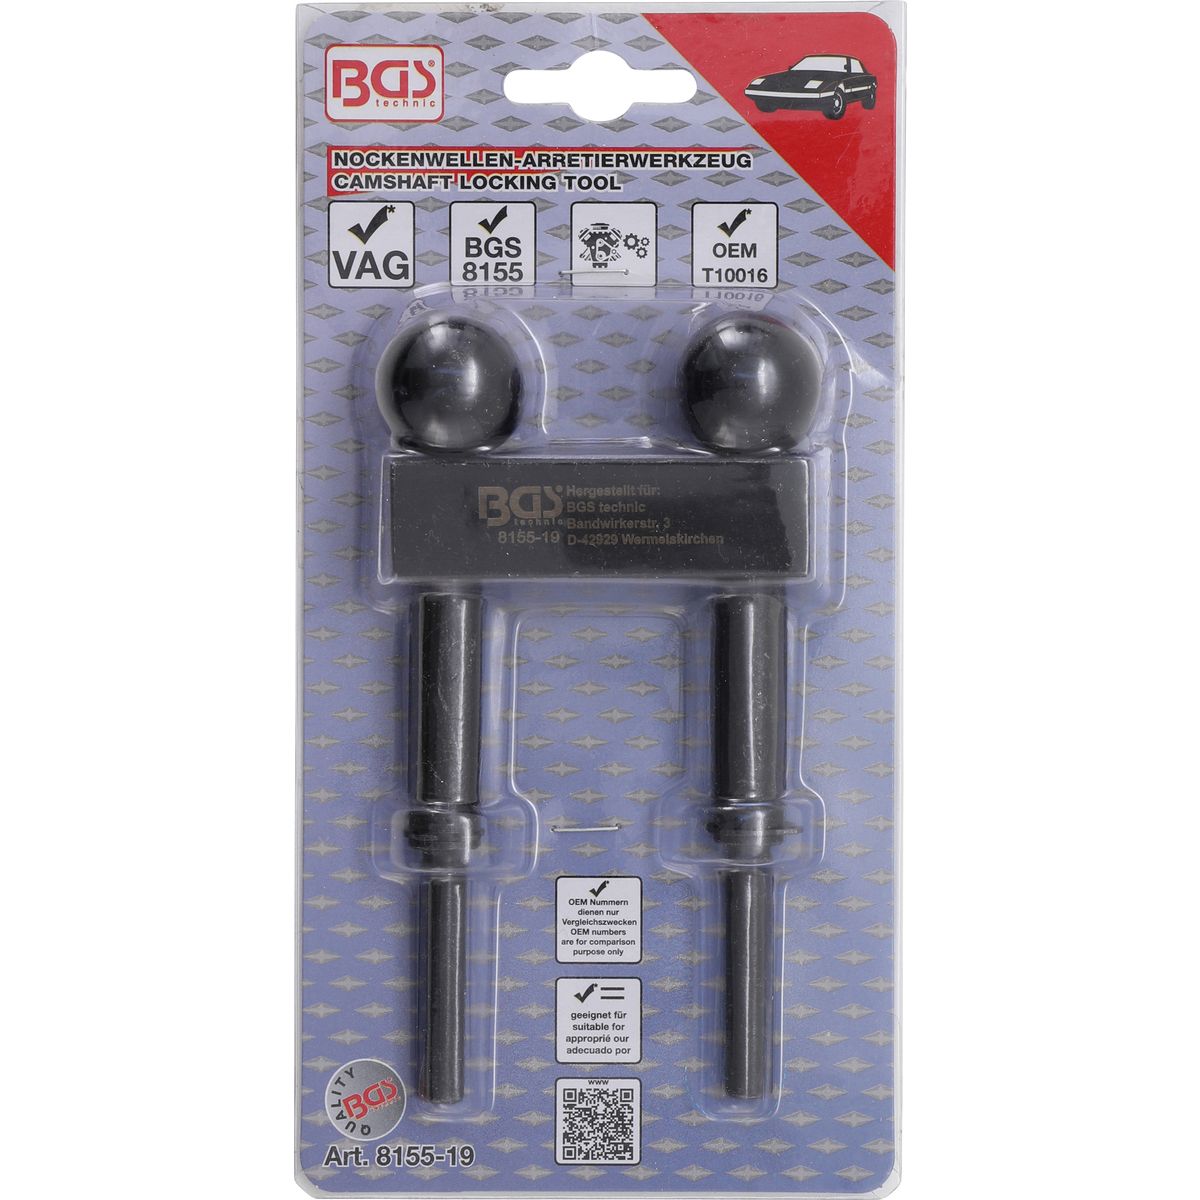 Camshaft Locking Tool | for BGS 8155